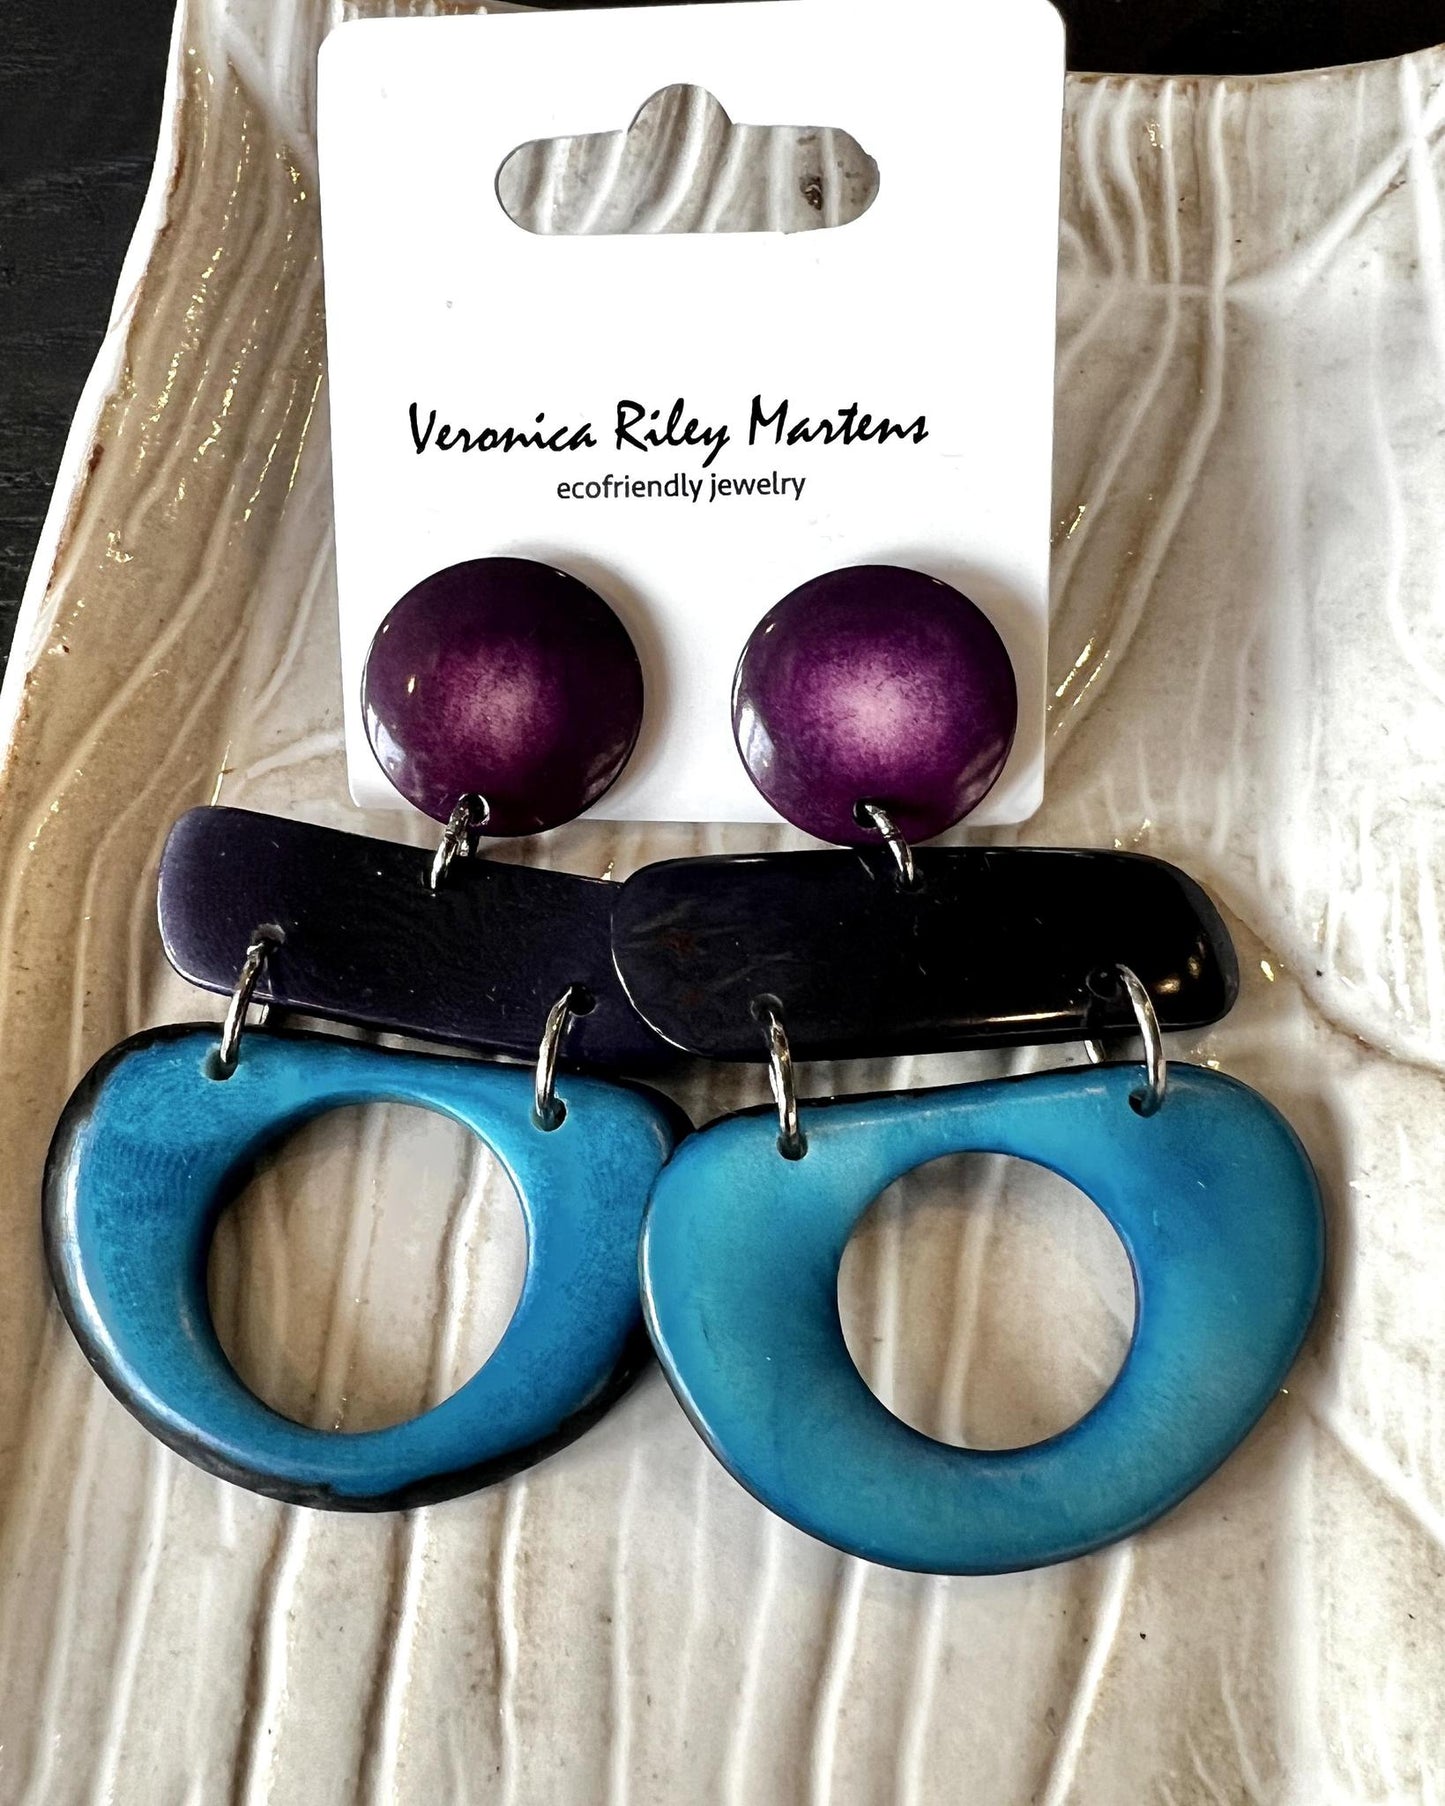 Veronica Riley Martens 3-piece Tagua Nut Earrings - Purple and Blue